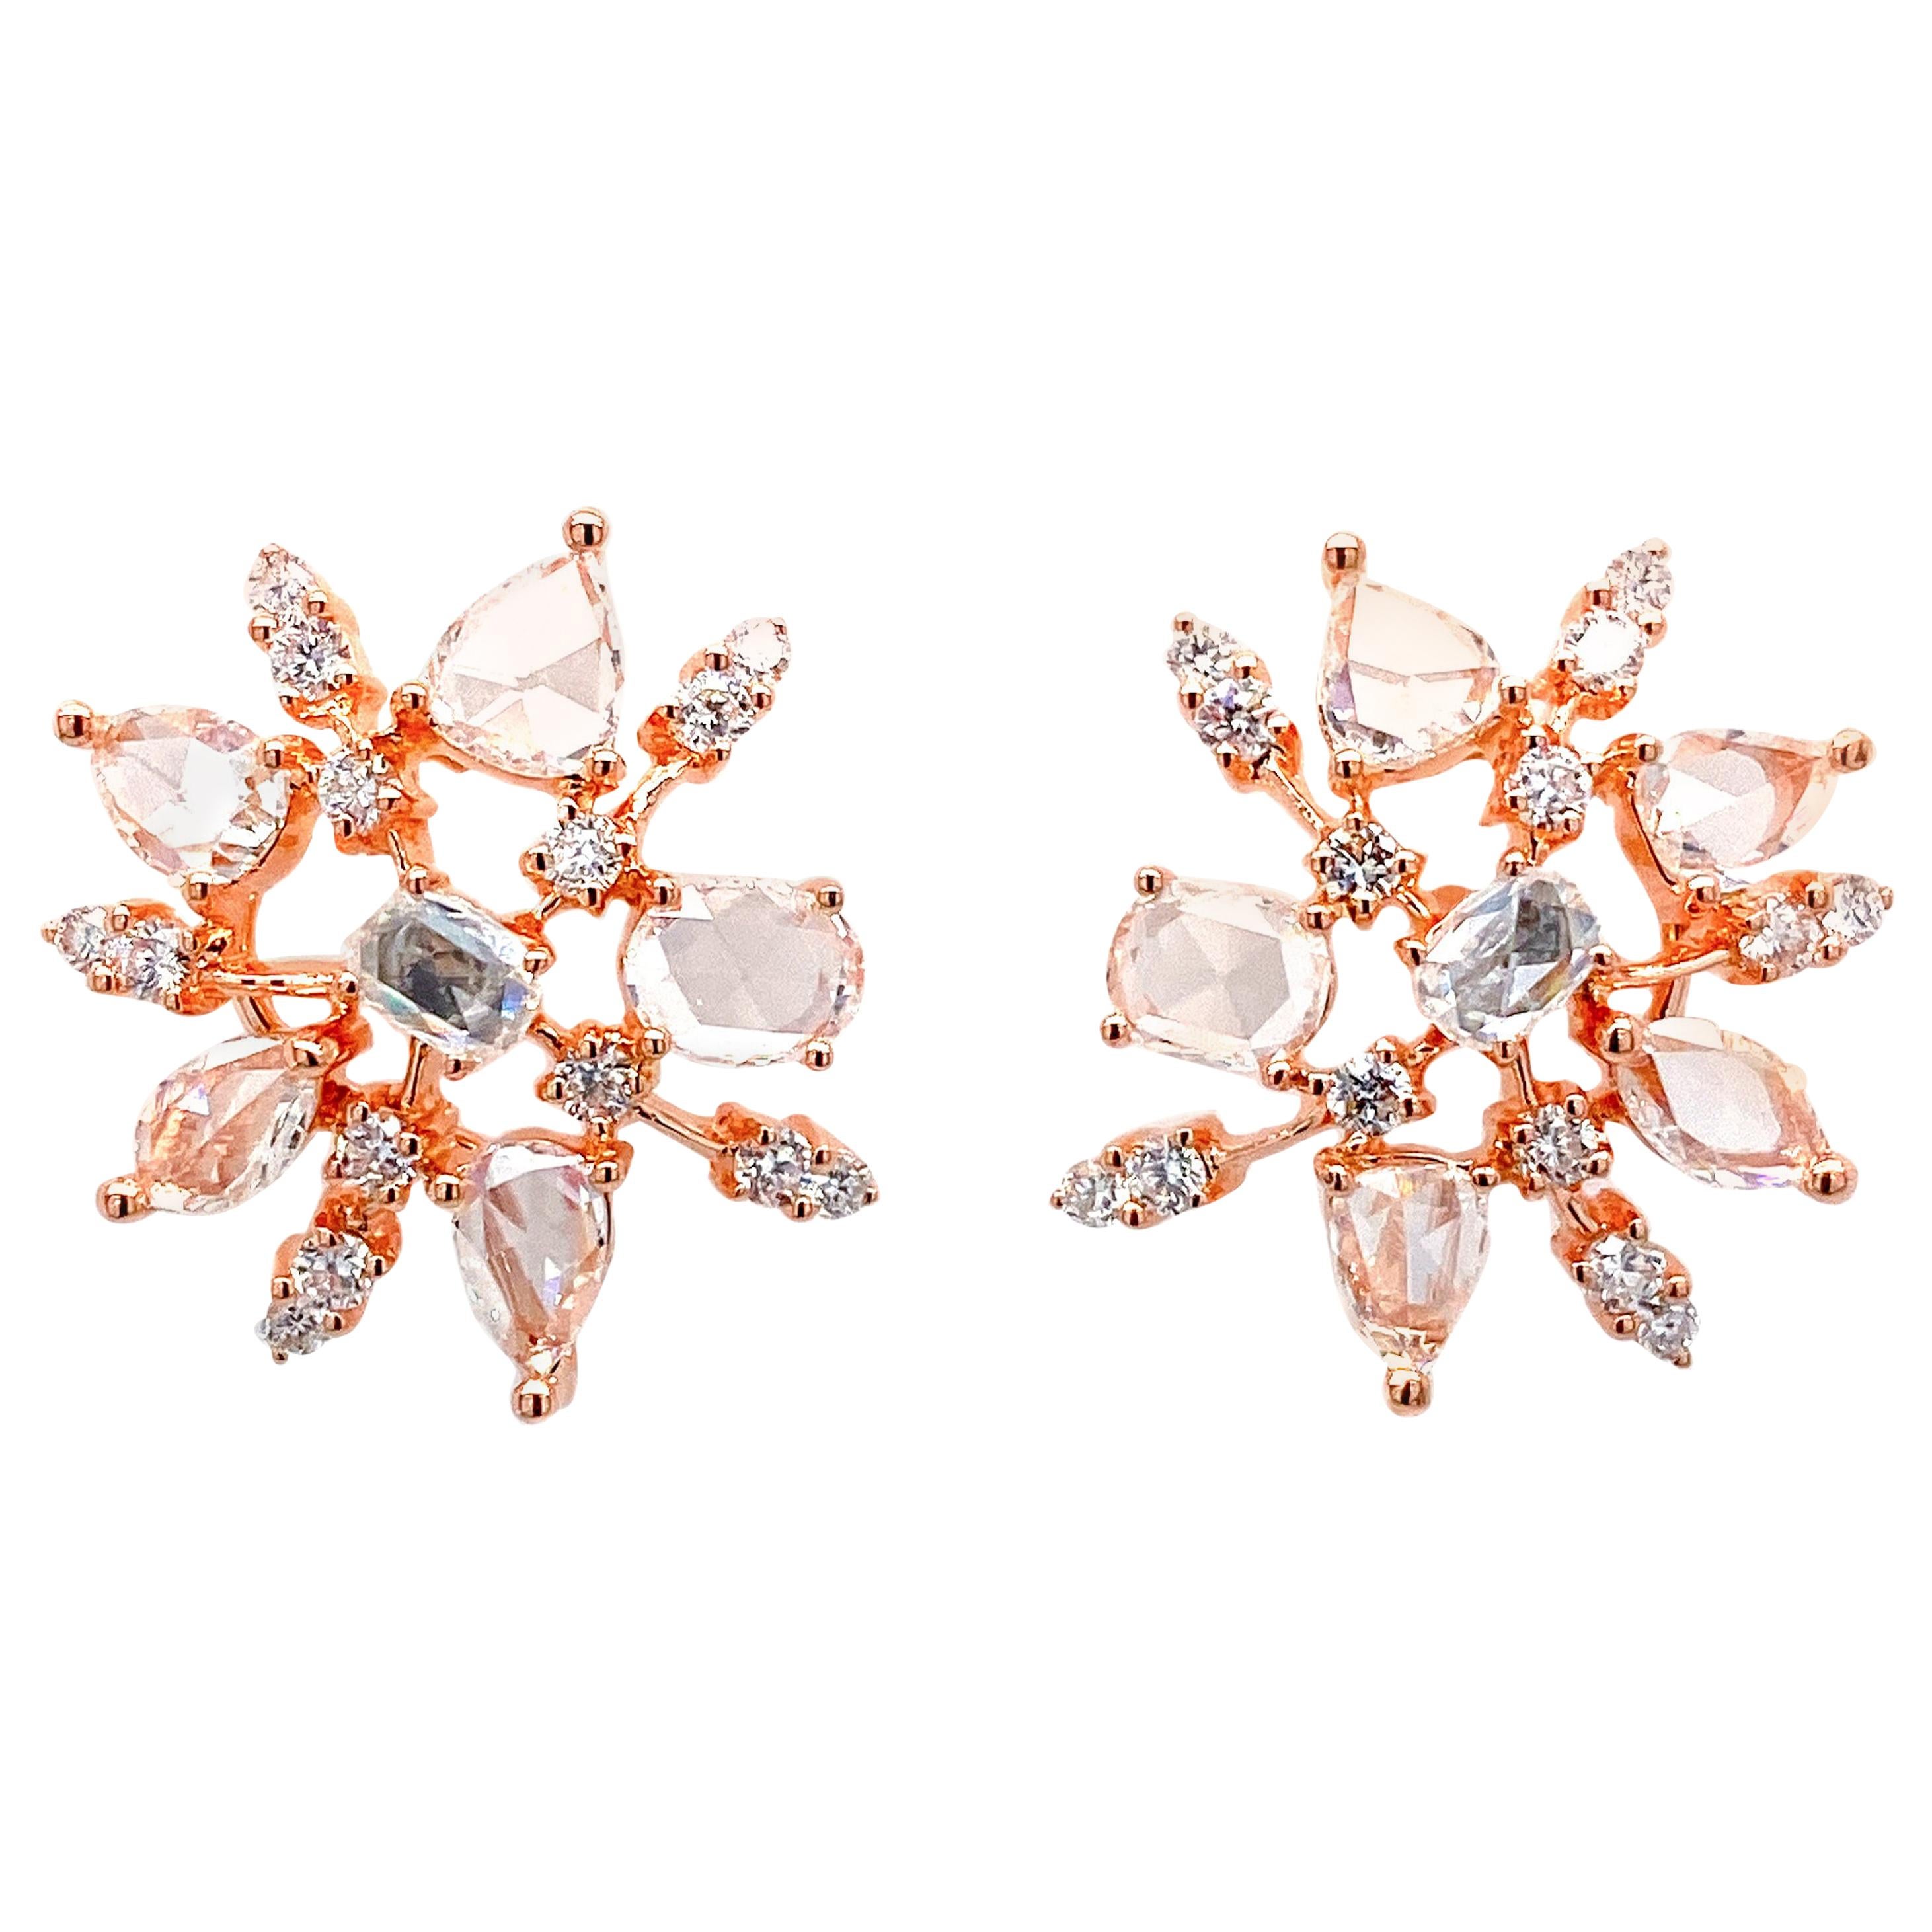 Spark Motif White Diamond Earrings by Dilys’ in 18 Karat Rose Gold For Sale